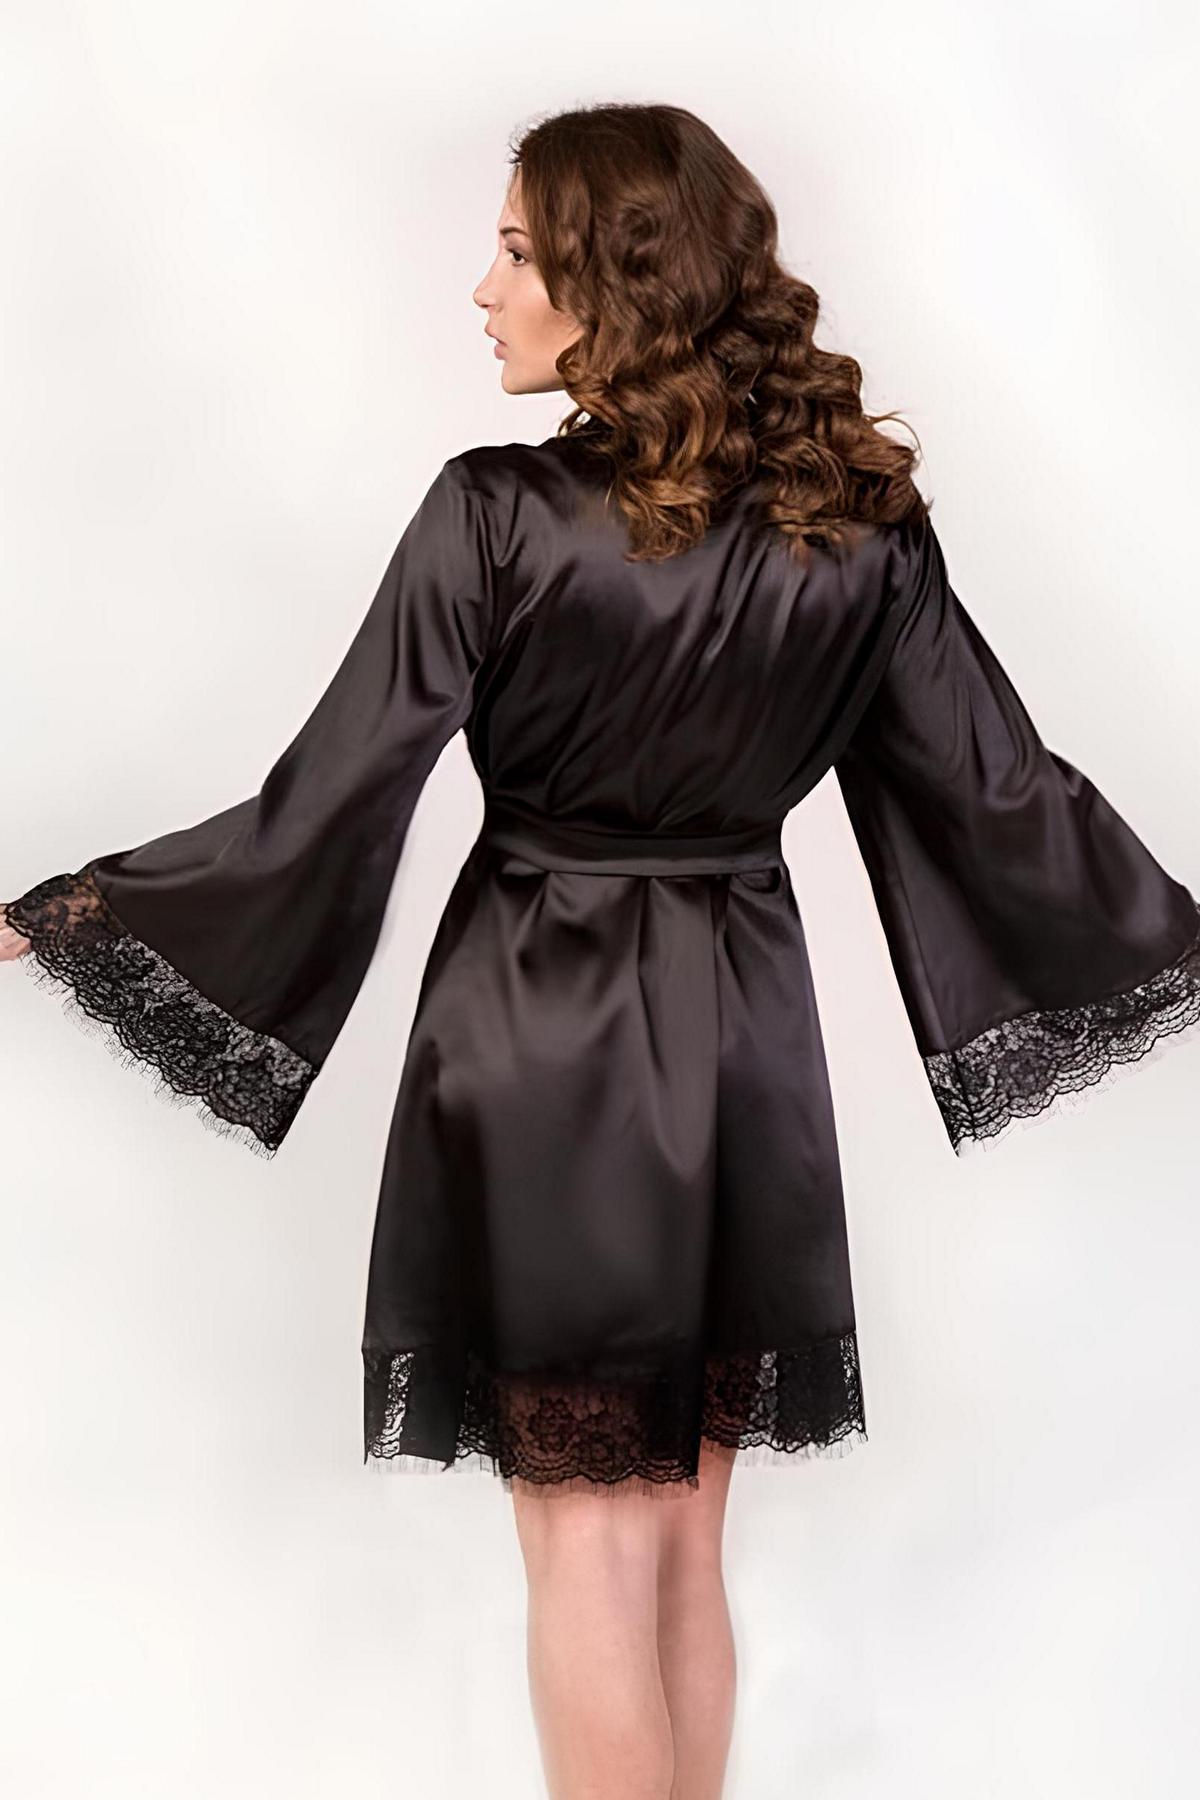 Chic bridesmaid gift - Short Lace-Trim Black Satin Robe - back view